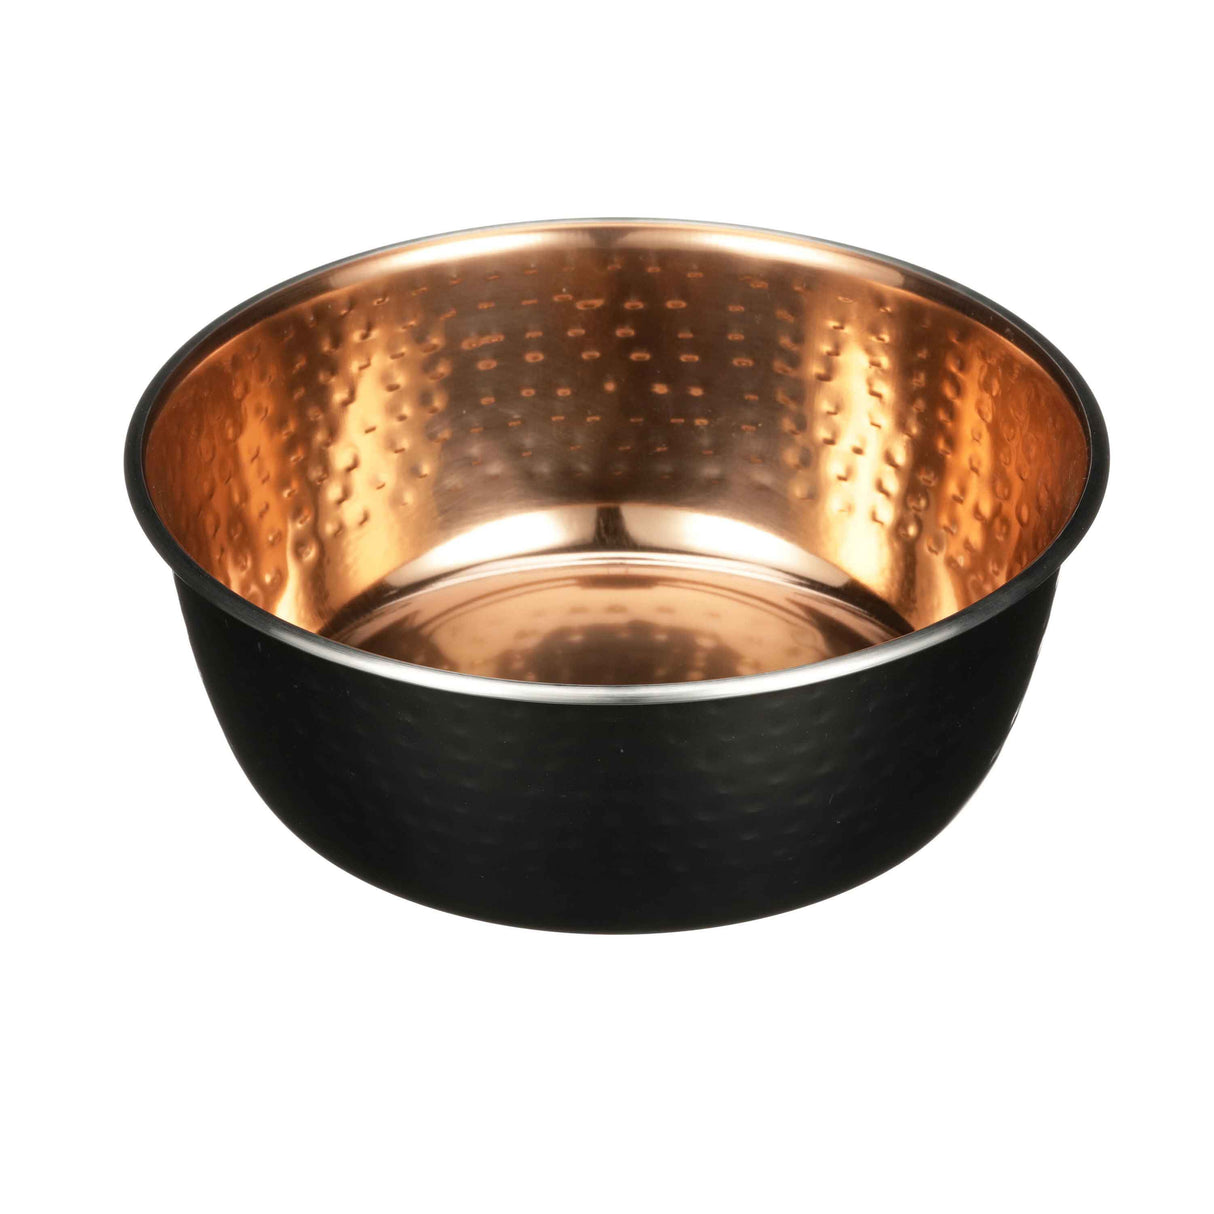 The side of Black Hammered Copper Pet Food Bowl